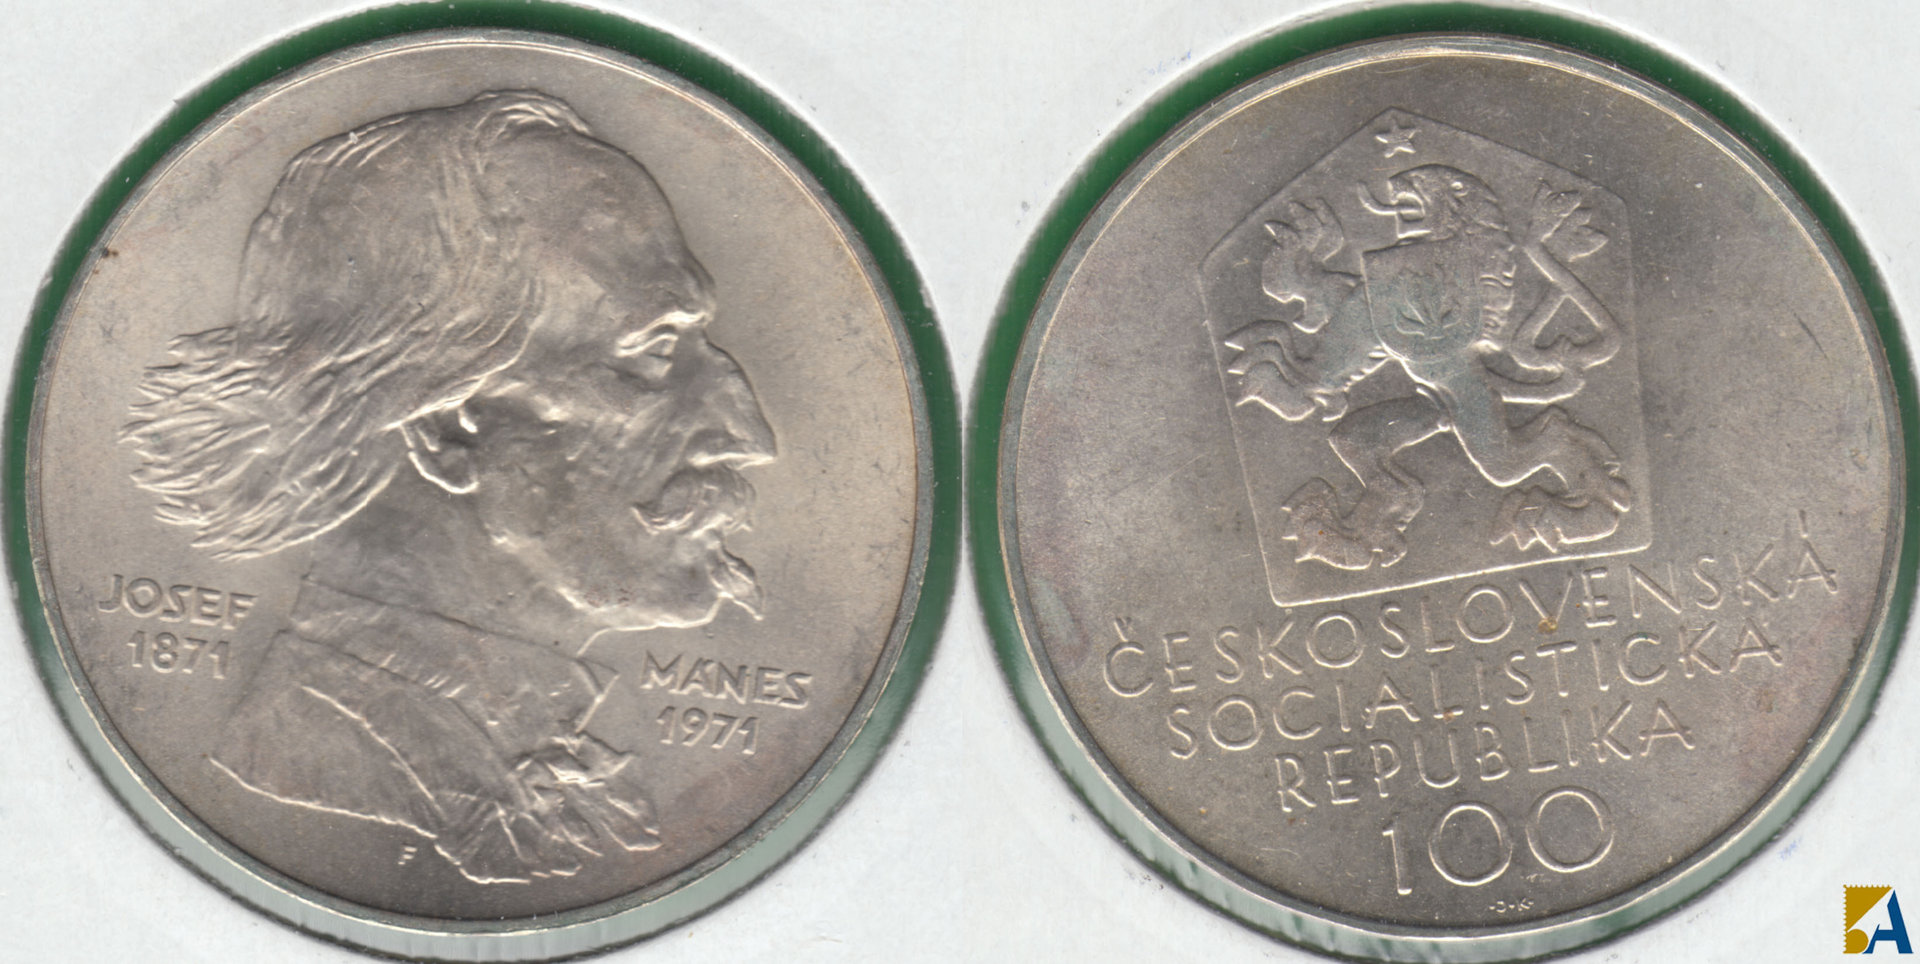 CHECOSLOVAQUIA - CZECHOSLOVAKIA. 100 CORONAS (KORUN) DE 1971. PLATA 0.700. (2)